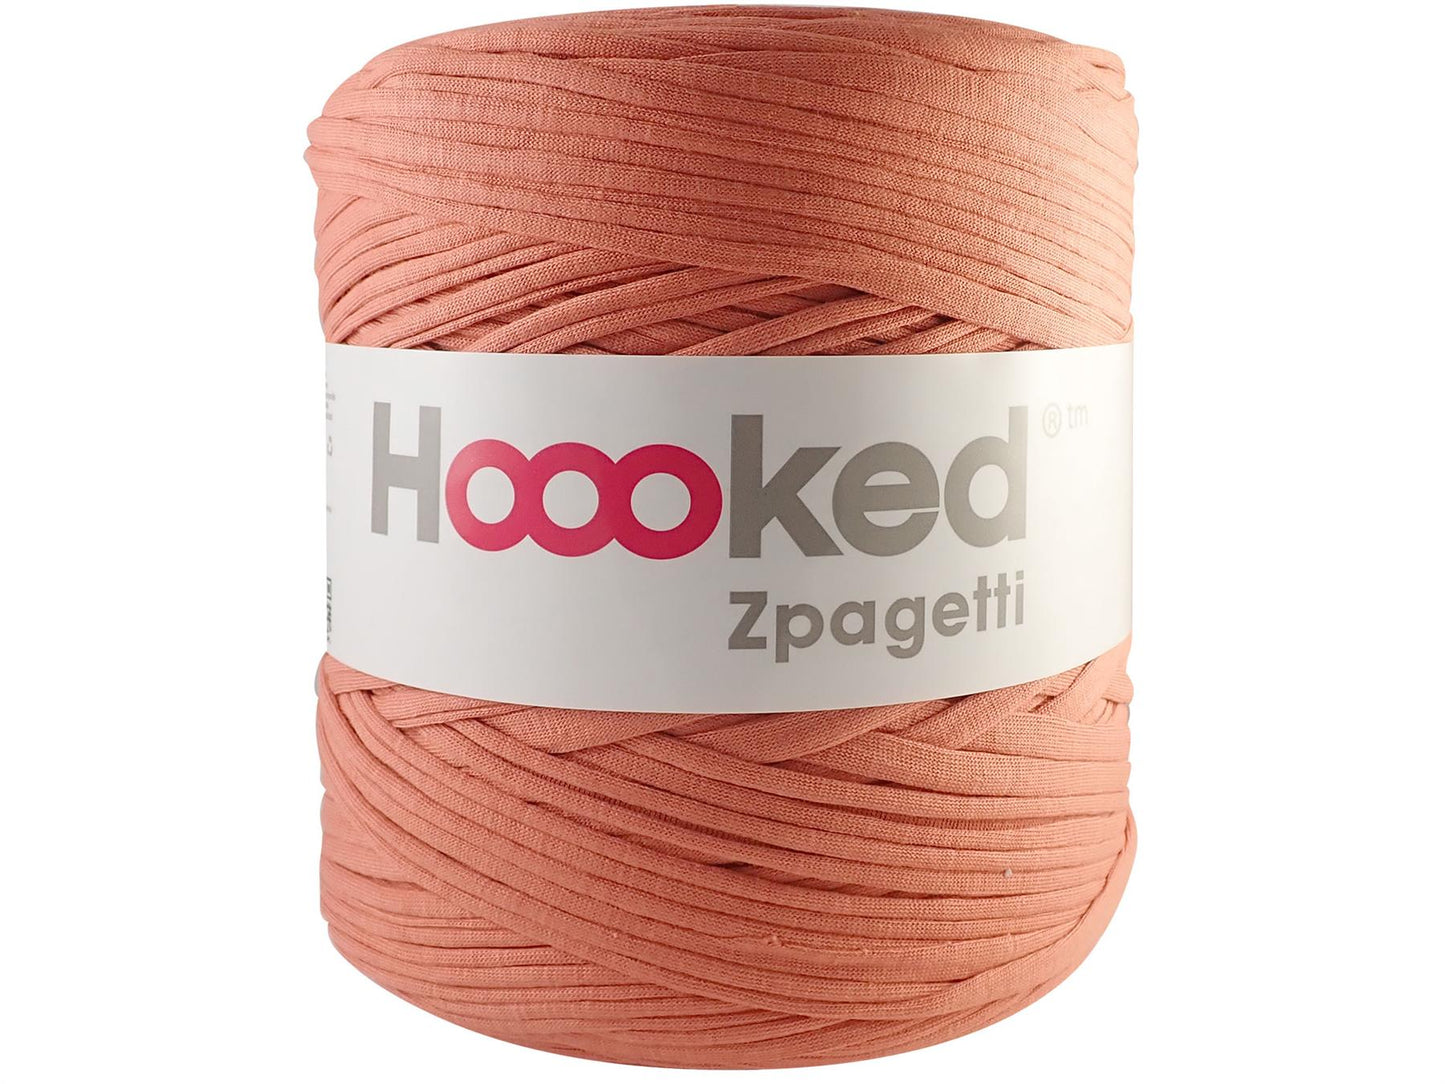 Hoooked Zpagetti Burnt Orange Cotton T-Shirt Yarn - 120M 700g